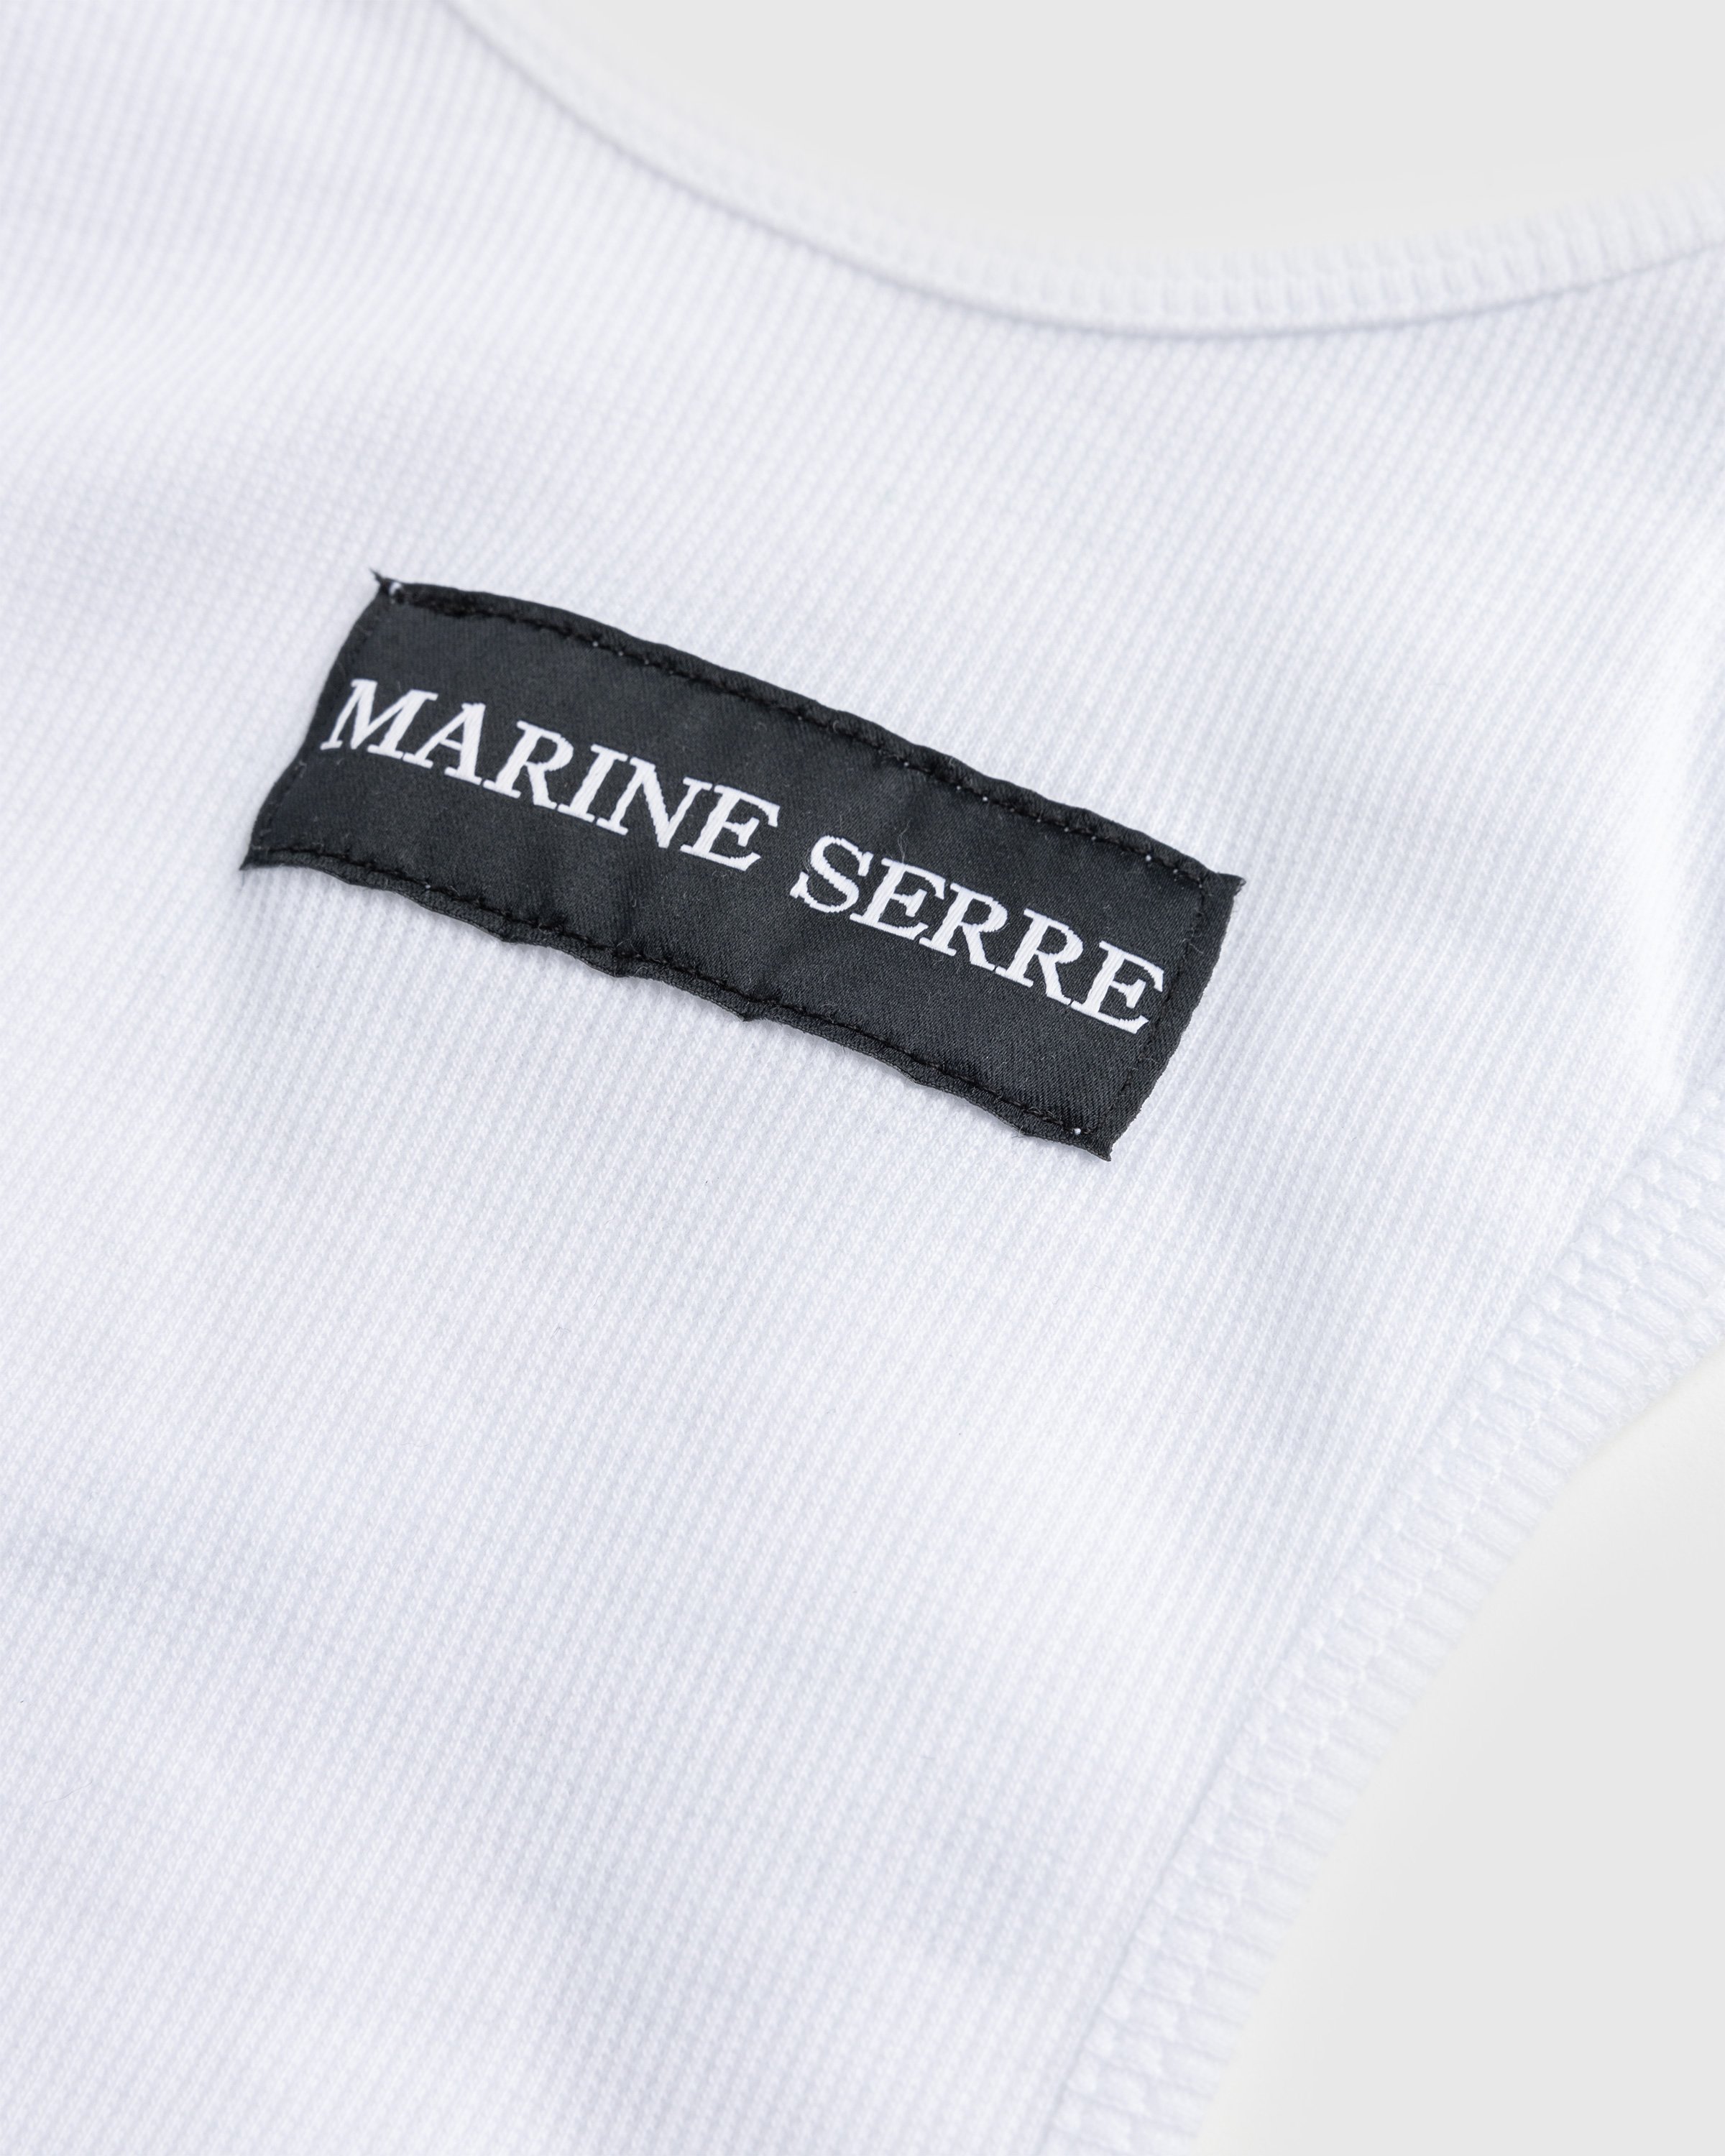 Marine Serre - Organic Cotton Tank Top White - Clothing - undefined - Image 6